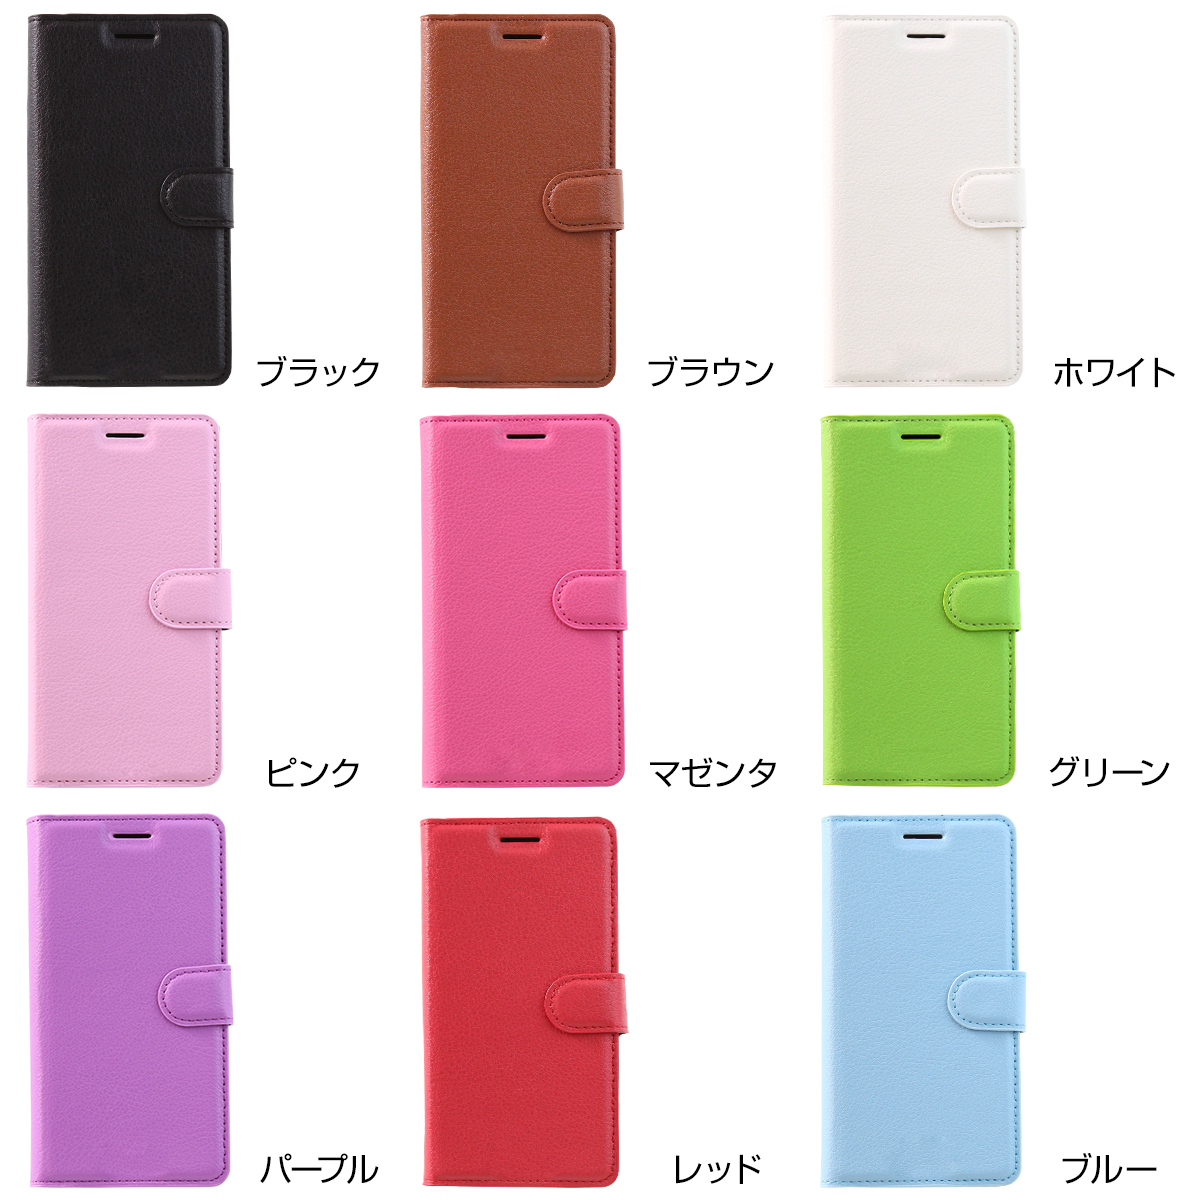 Xiaomi Mi Note 10 レザー手帳型ケース